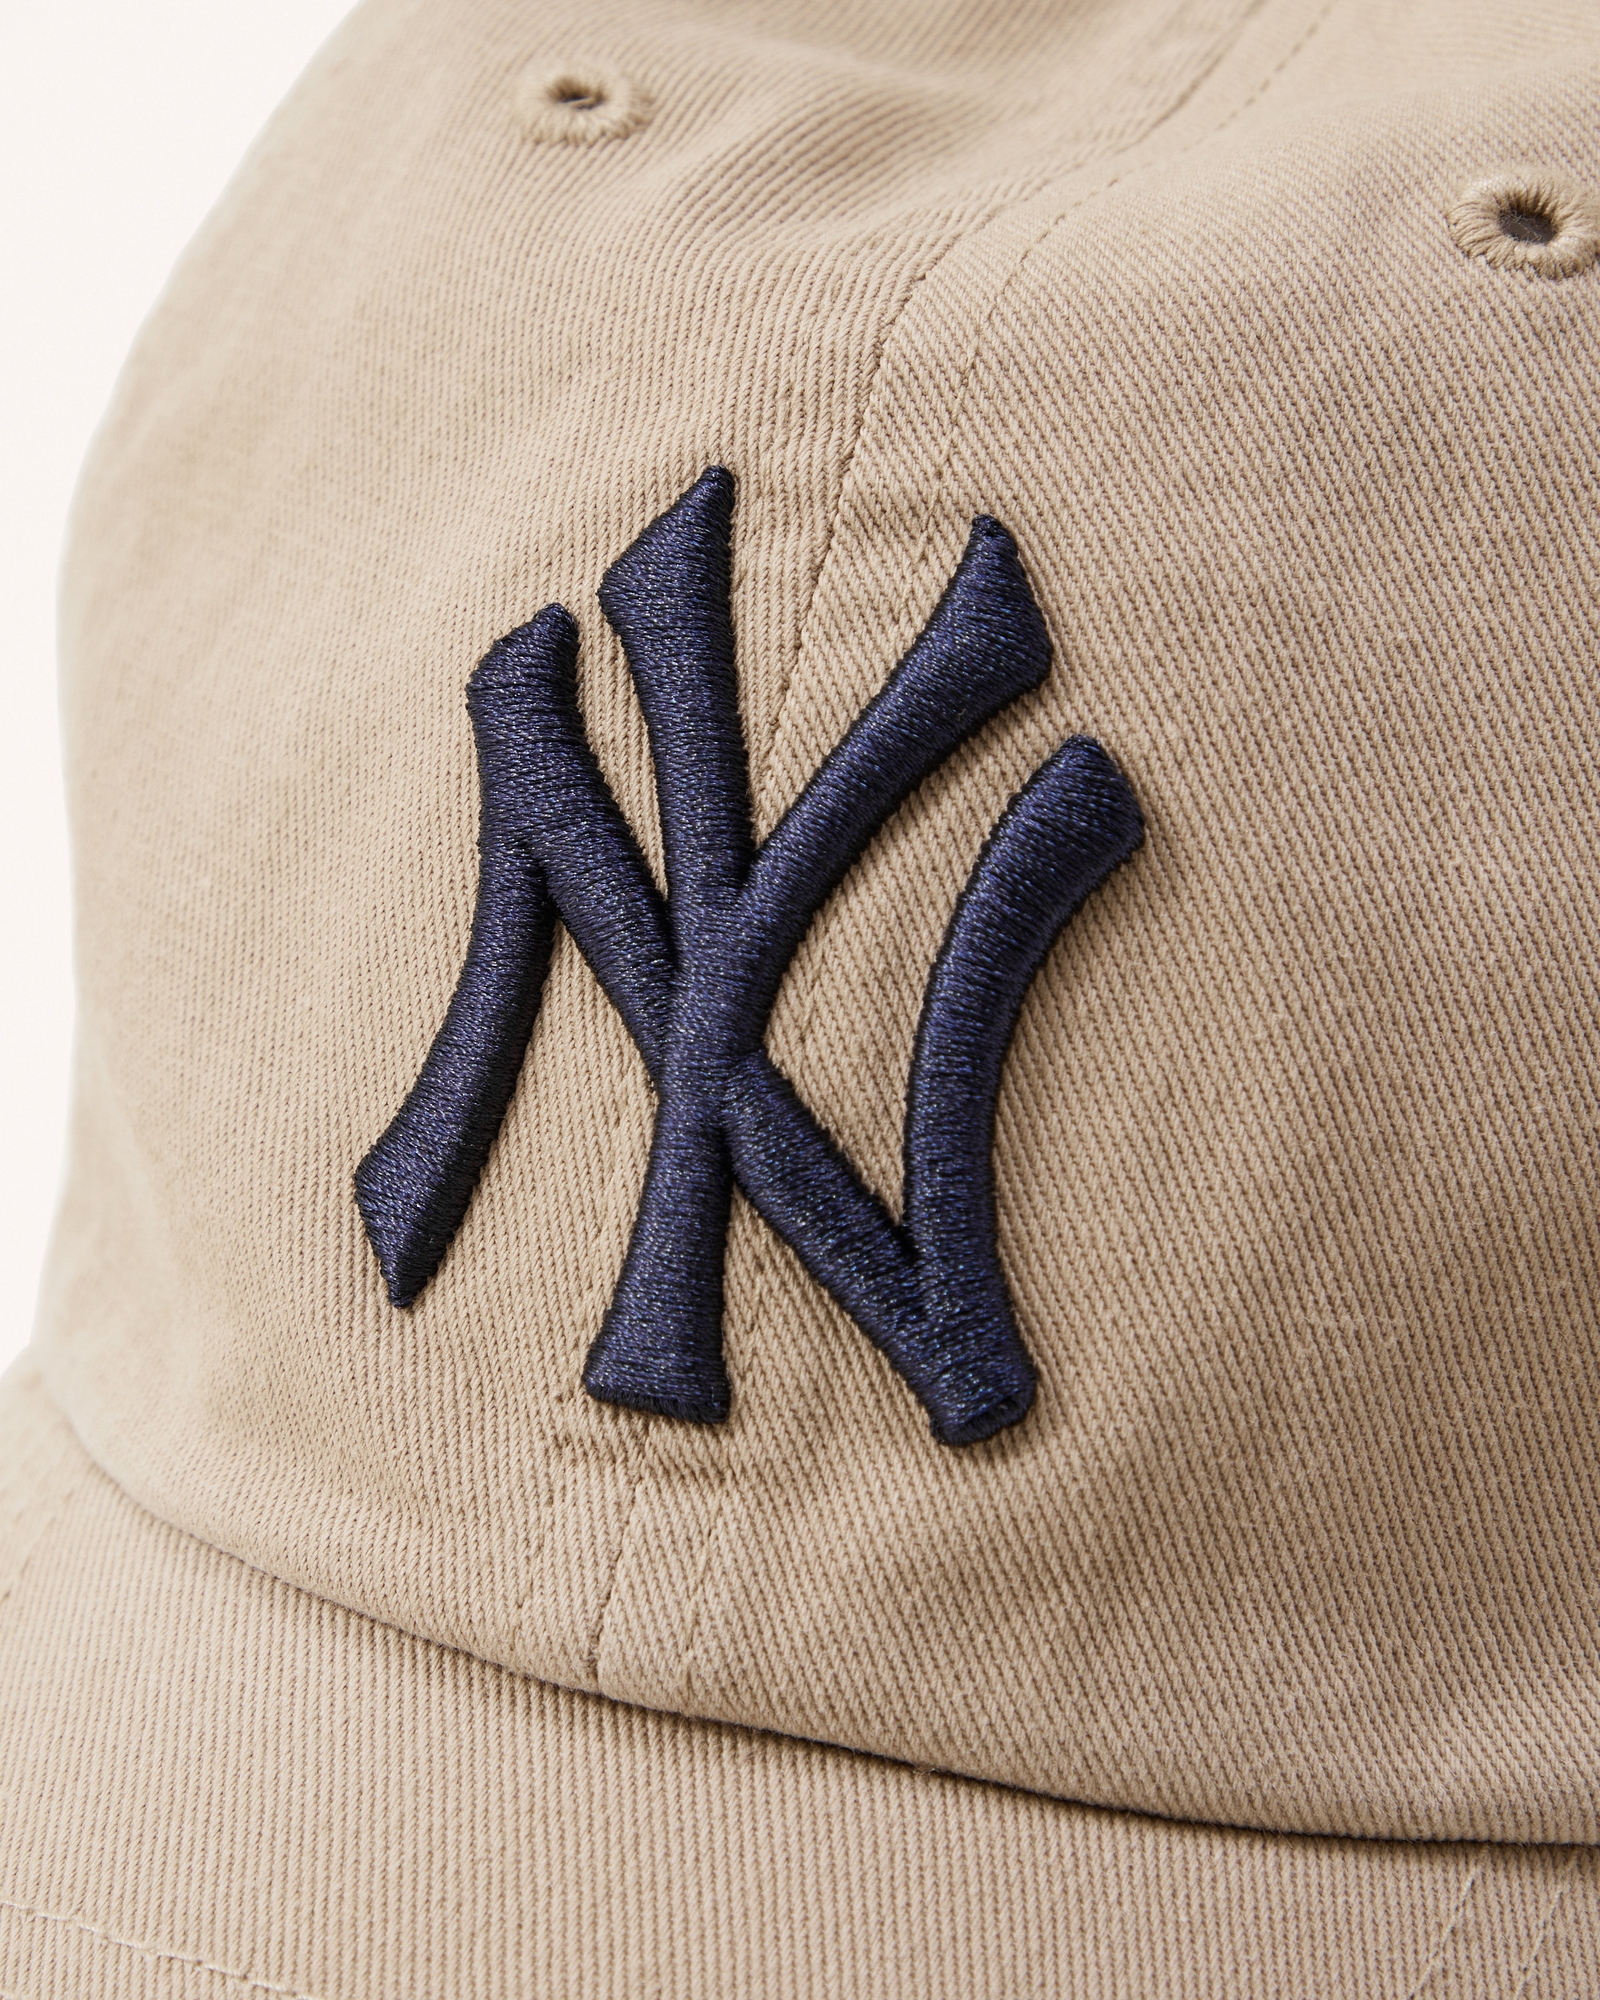 47 Brand Relaxed Fit Cap - MLB New York Yankees Khaki Beige